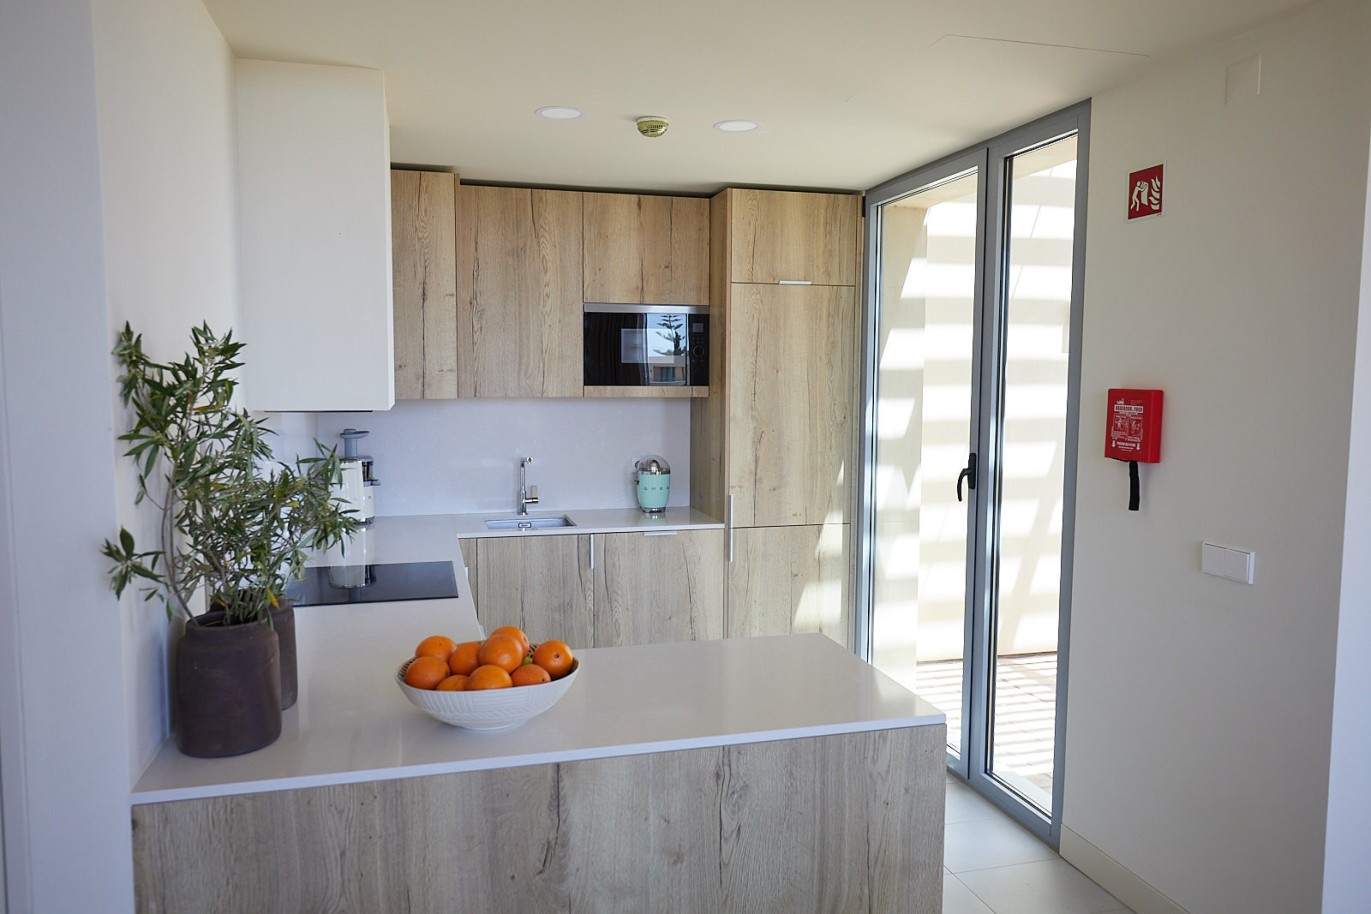 2 bedroom apartment in resort, for sale in Porches, Algarve_230560